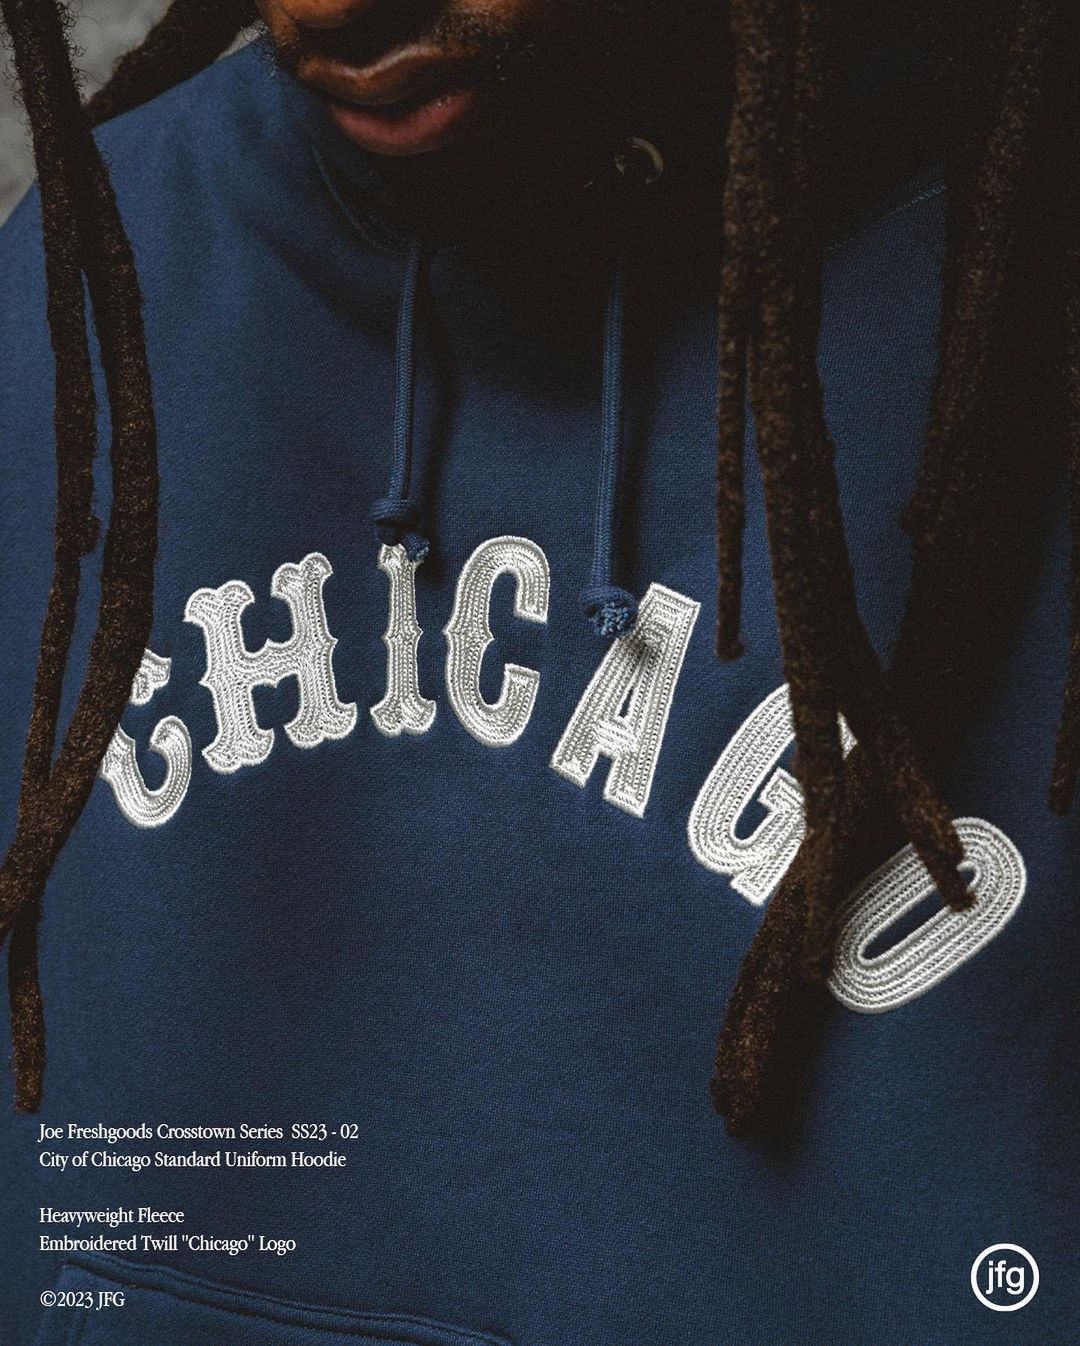 Joe Freshgoods for Chicago “Across Town” 2023 Collection (ジョー・フレッシュグッズ フォー シカゴ “アクロス タウン” アパレル コレクション)